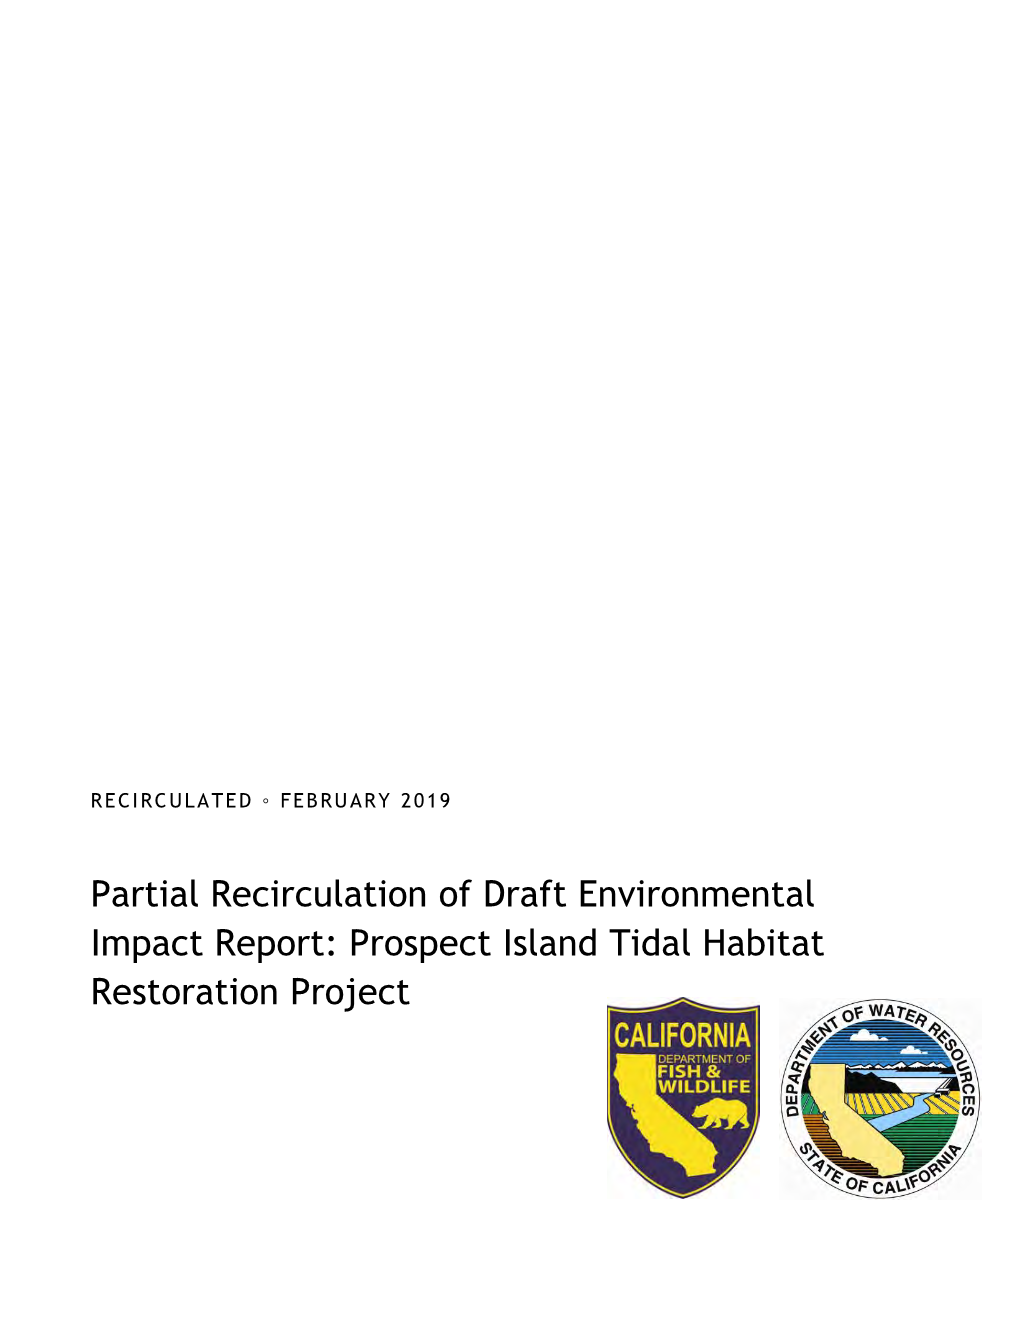 Prospect Island Tidal Habitat Restoration Project